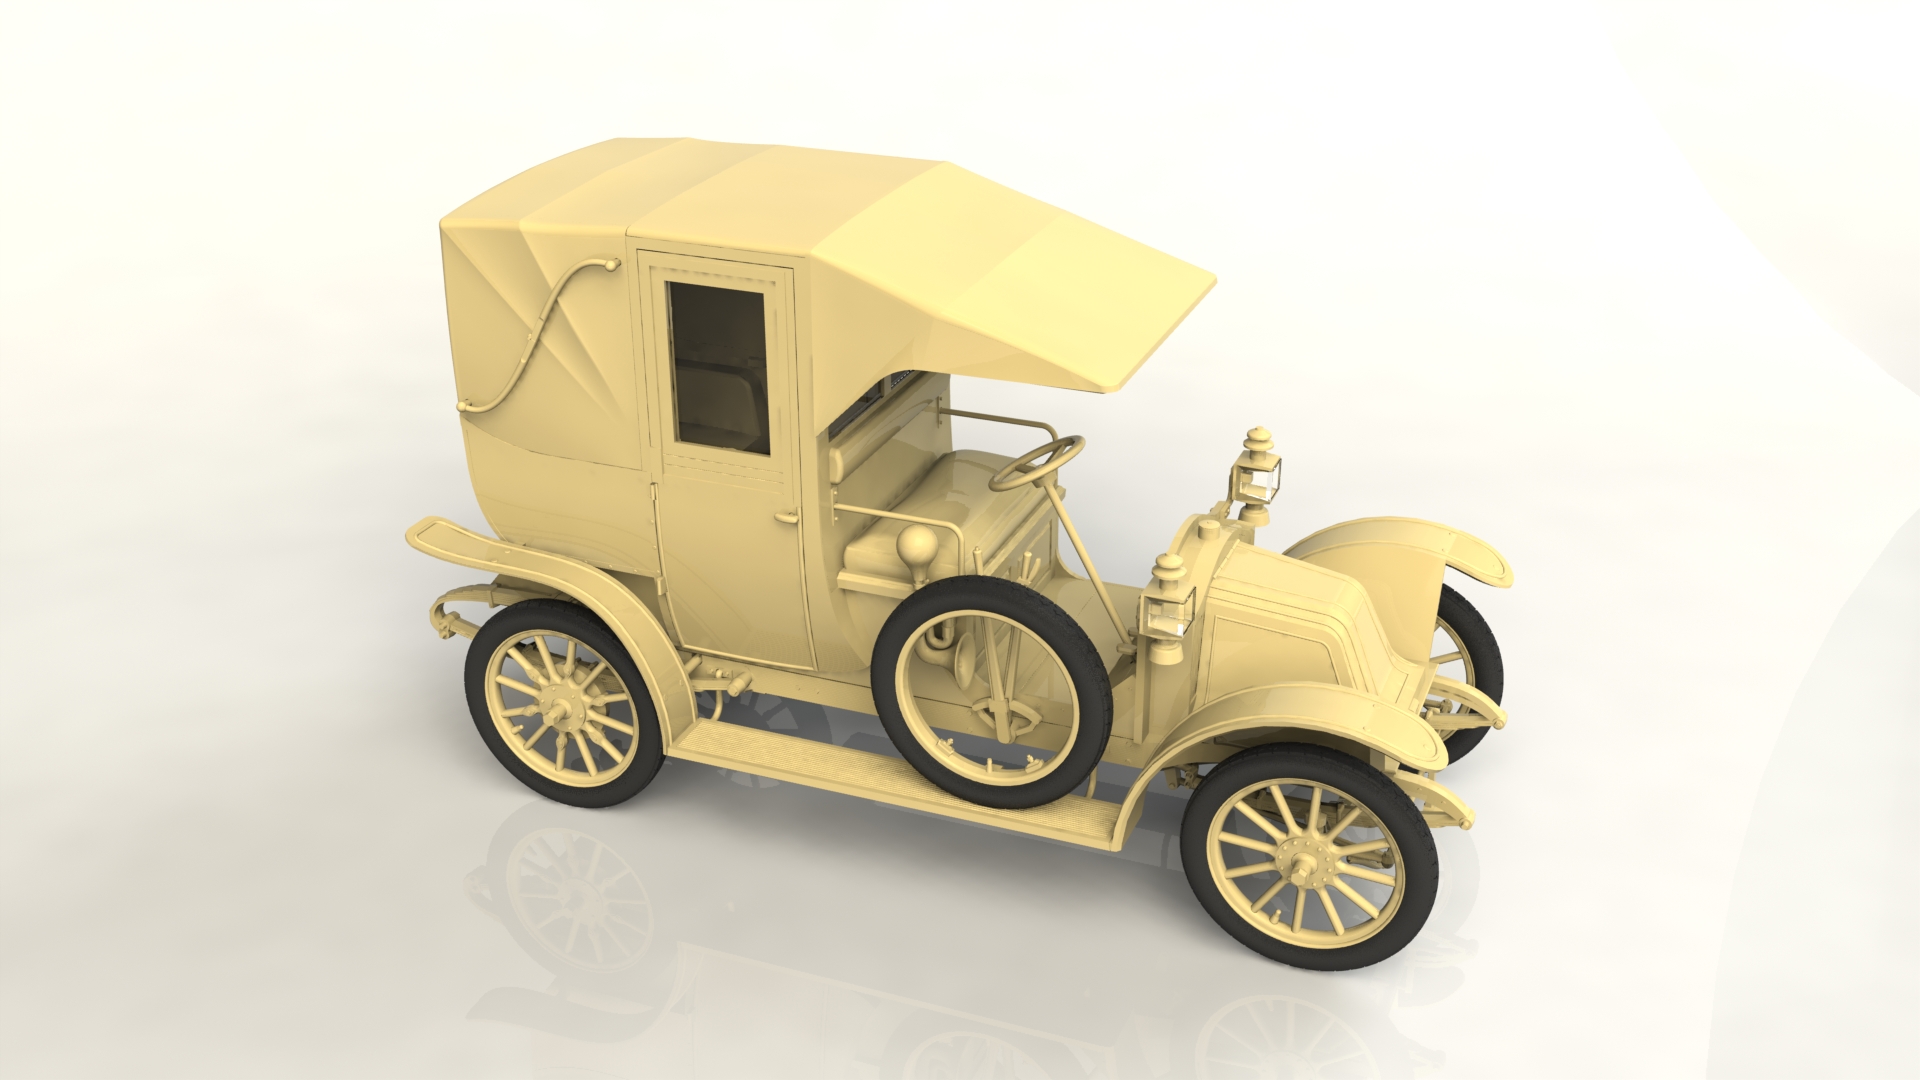 1/24 Type AG 1910 Paris Taxi (100% new molds) 24030